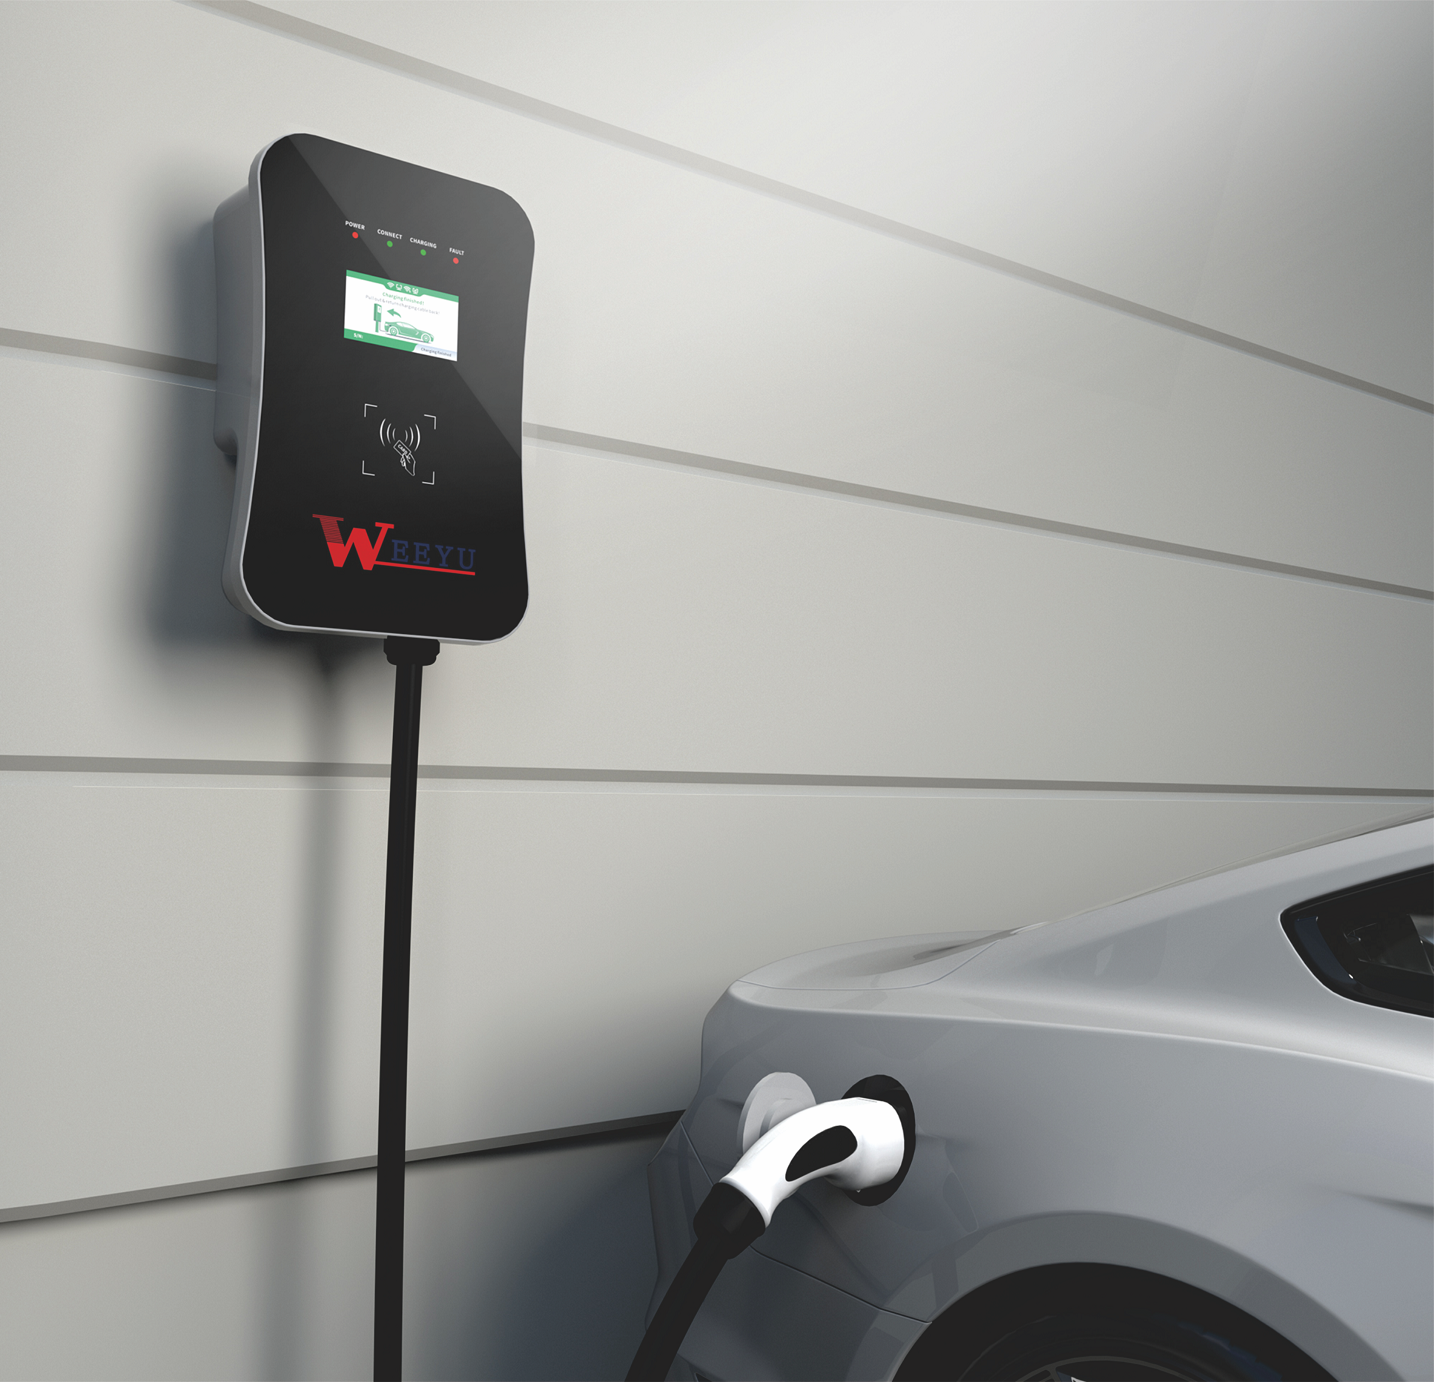 Sichuan Weiyu Electric će na Kantonskom sajmu predstaviti najnovija rješenja za punjenje električnih vozila